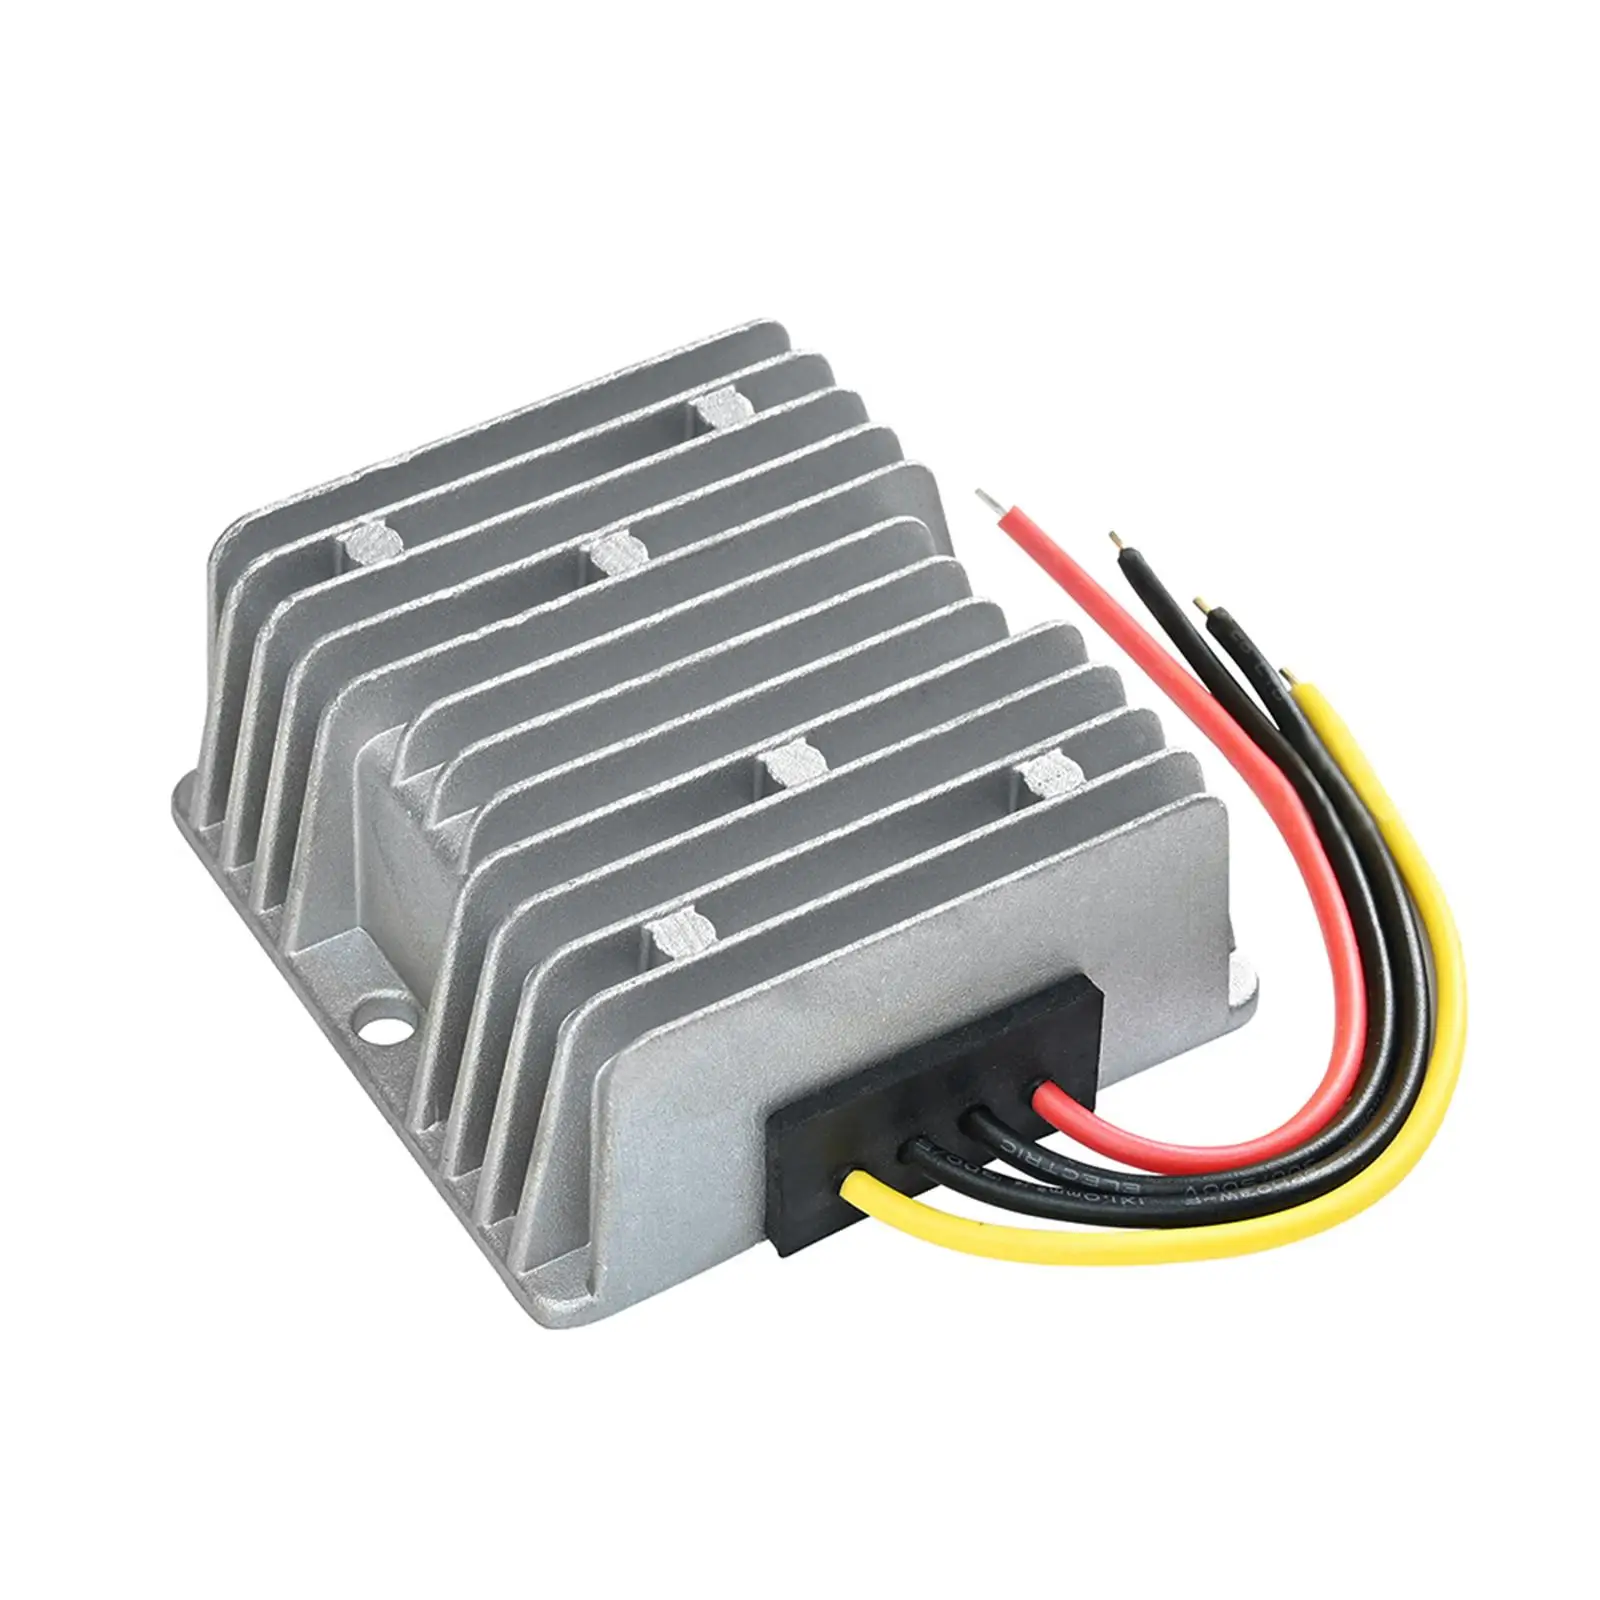 Converter Module Replaces Heat Dissipation DC Voltage Converter for Audio Cart